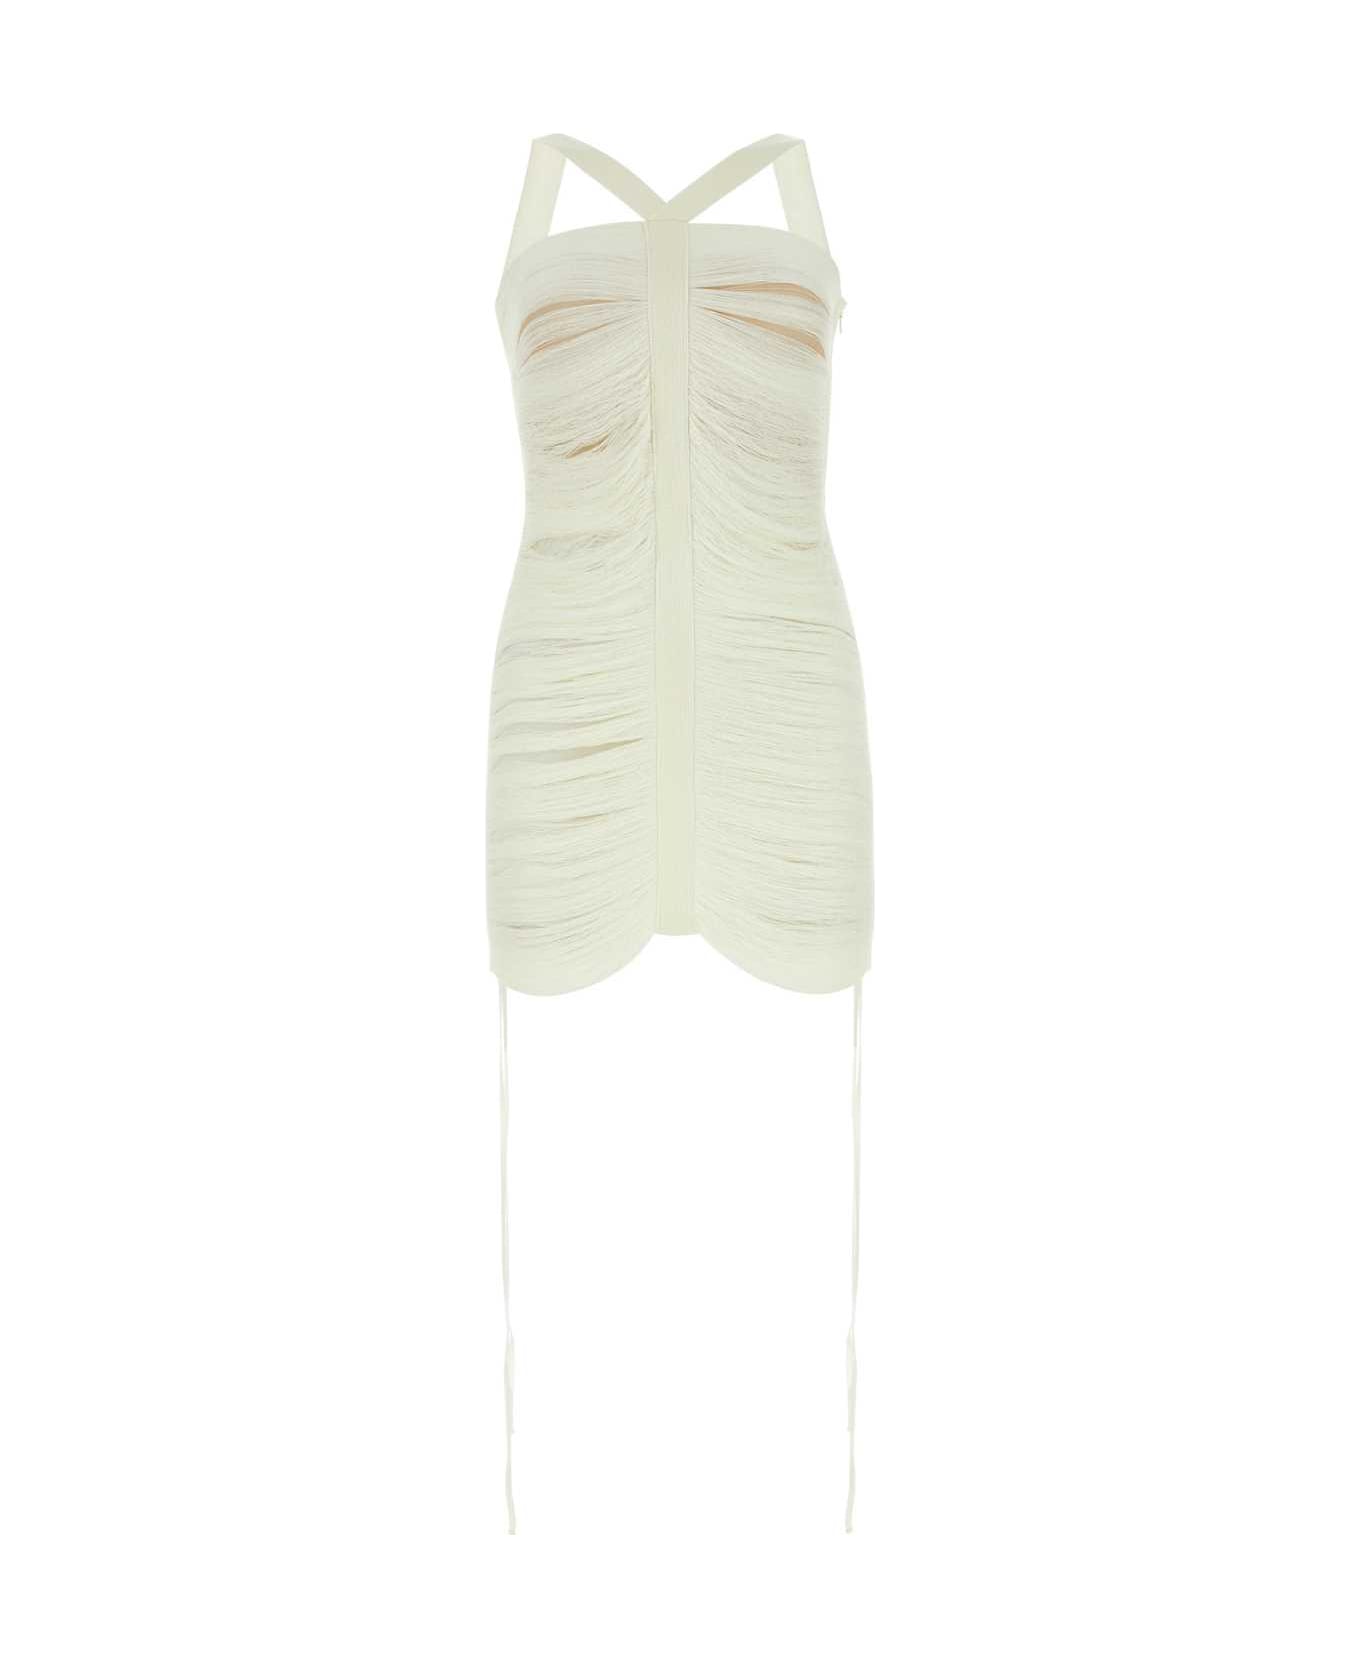 ANDREĀDAMO Ivory Viscose Blend Mini Dress - White